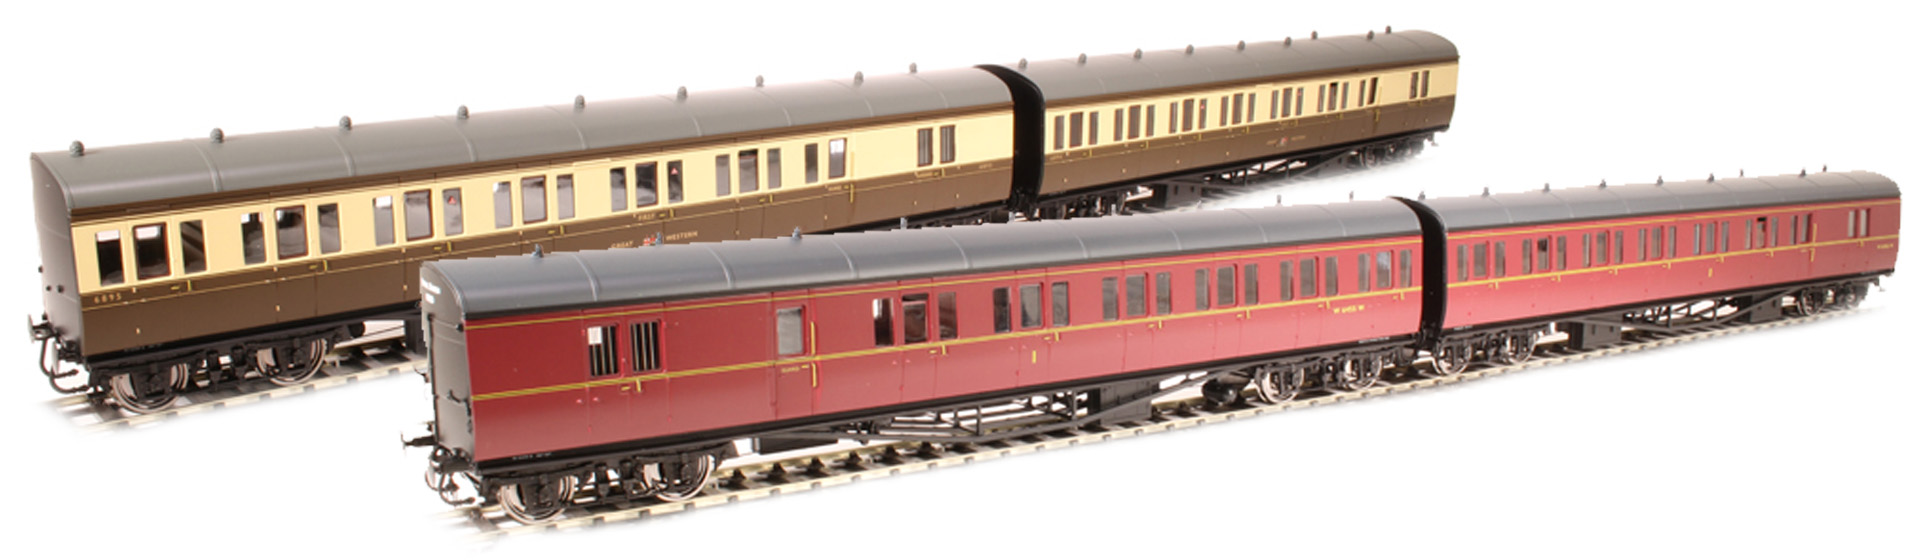 Lionheart Trains by Dapol O Gauge (1:43 Scale) GWR Collett "B Set"